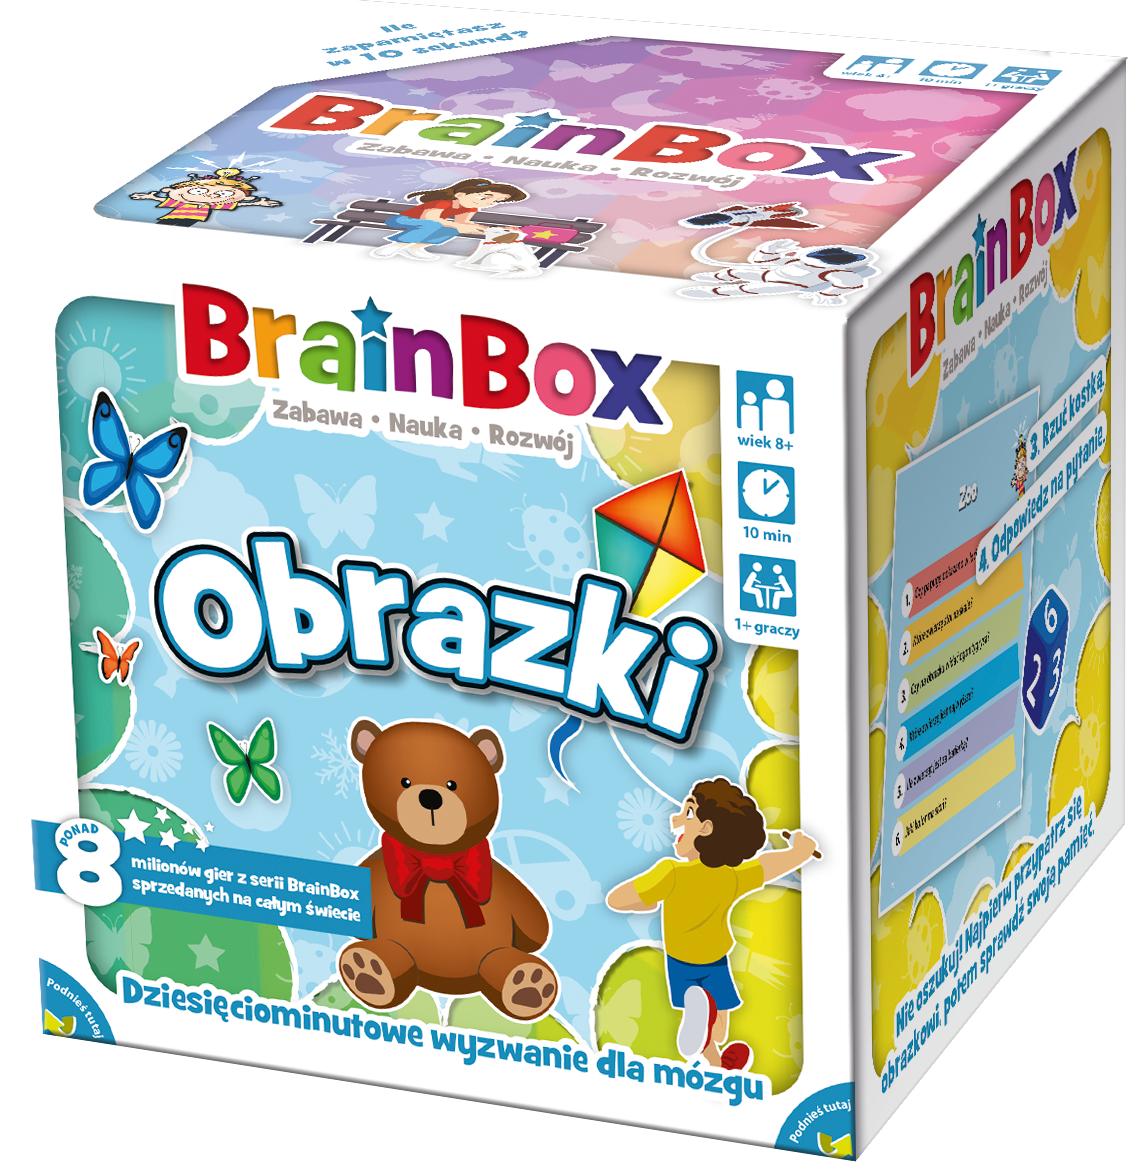 BrainBox - Obrazki (2 ed. Rebel)